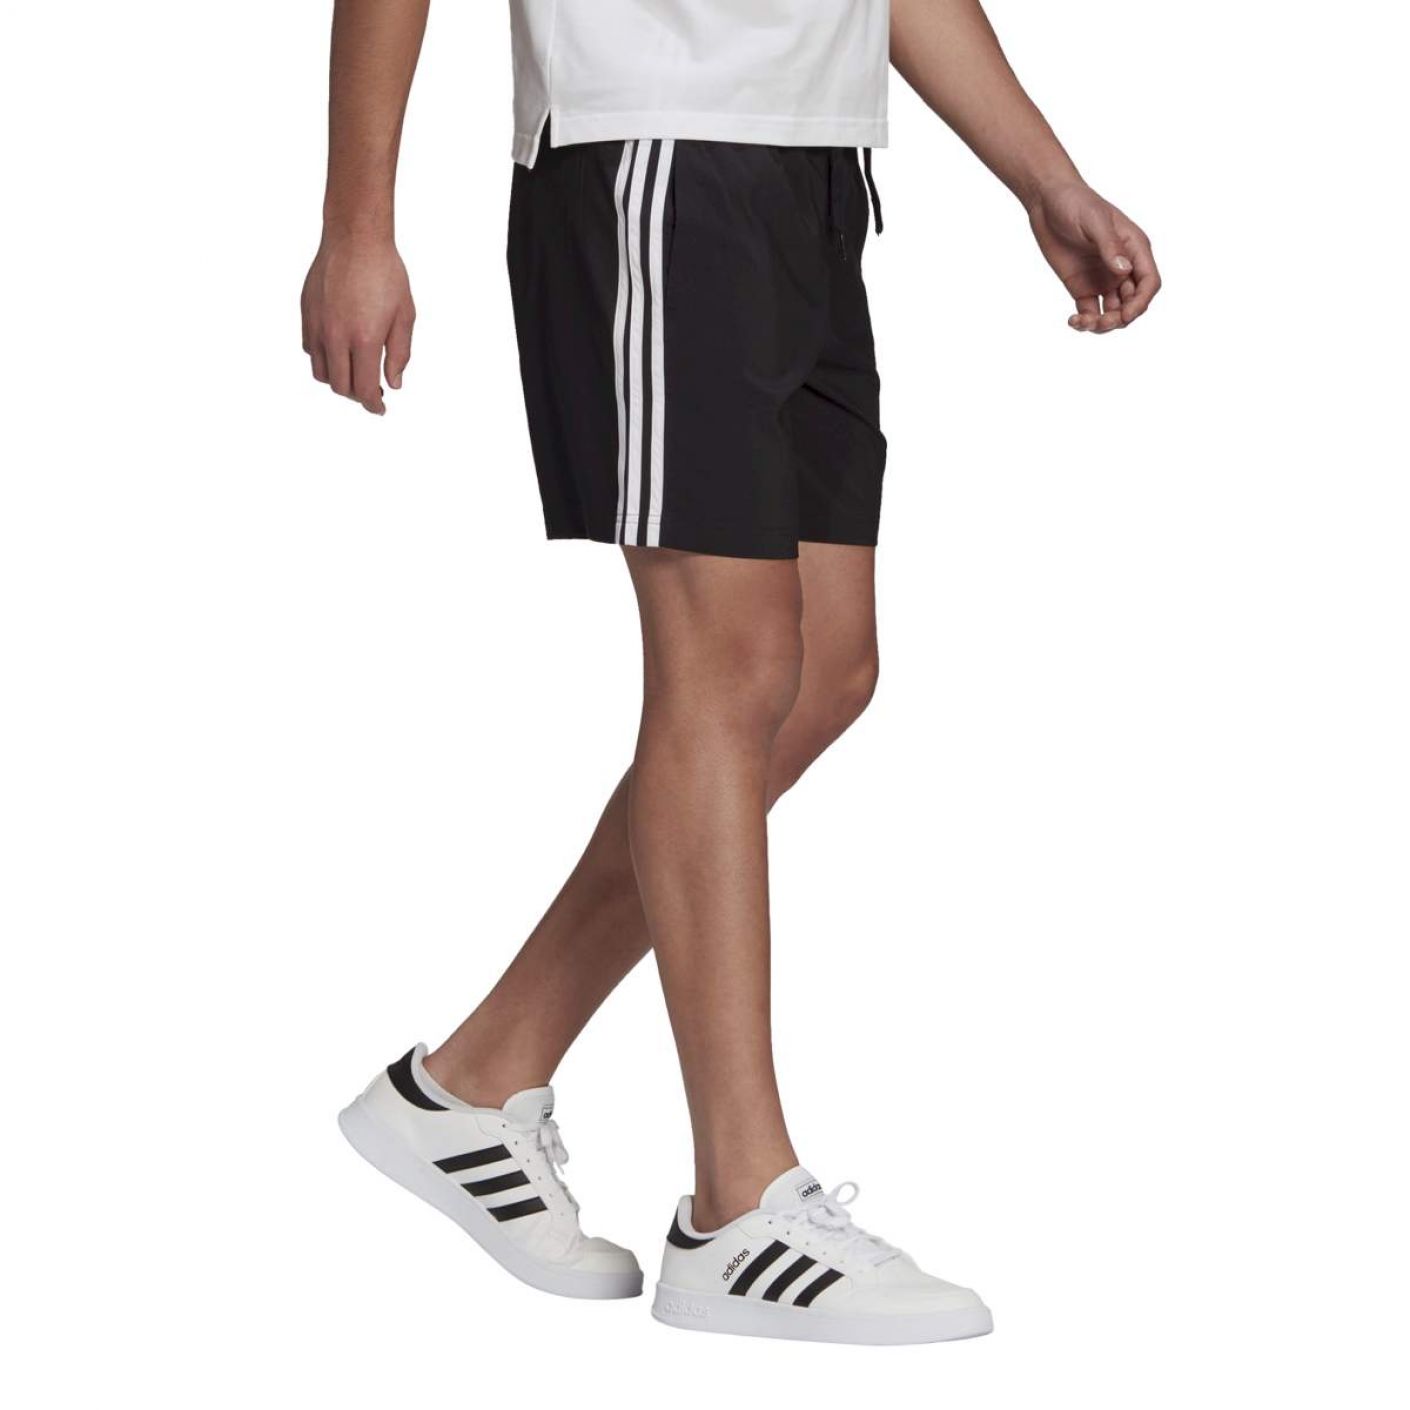 Adidas 3 Stripes Chelsea Shorts Neri